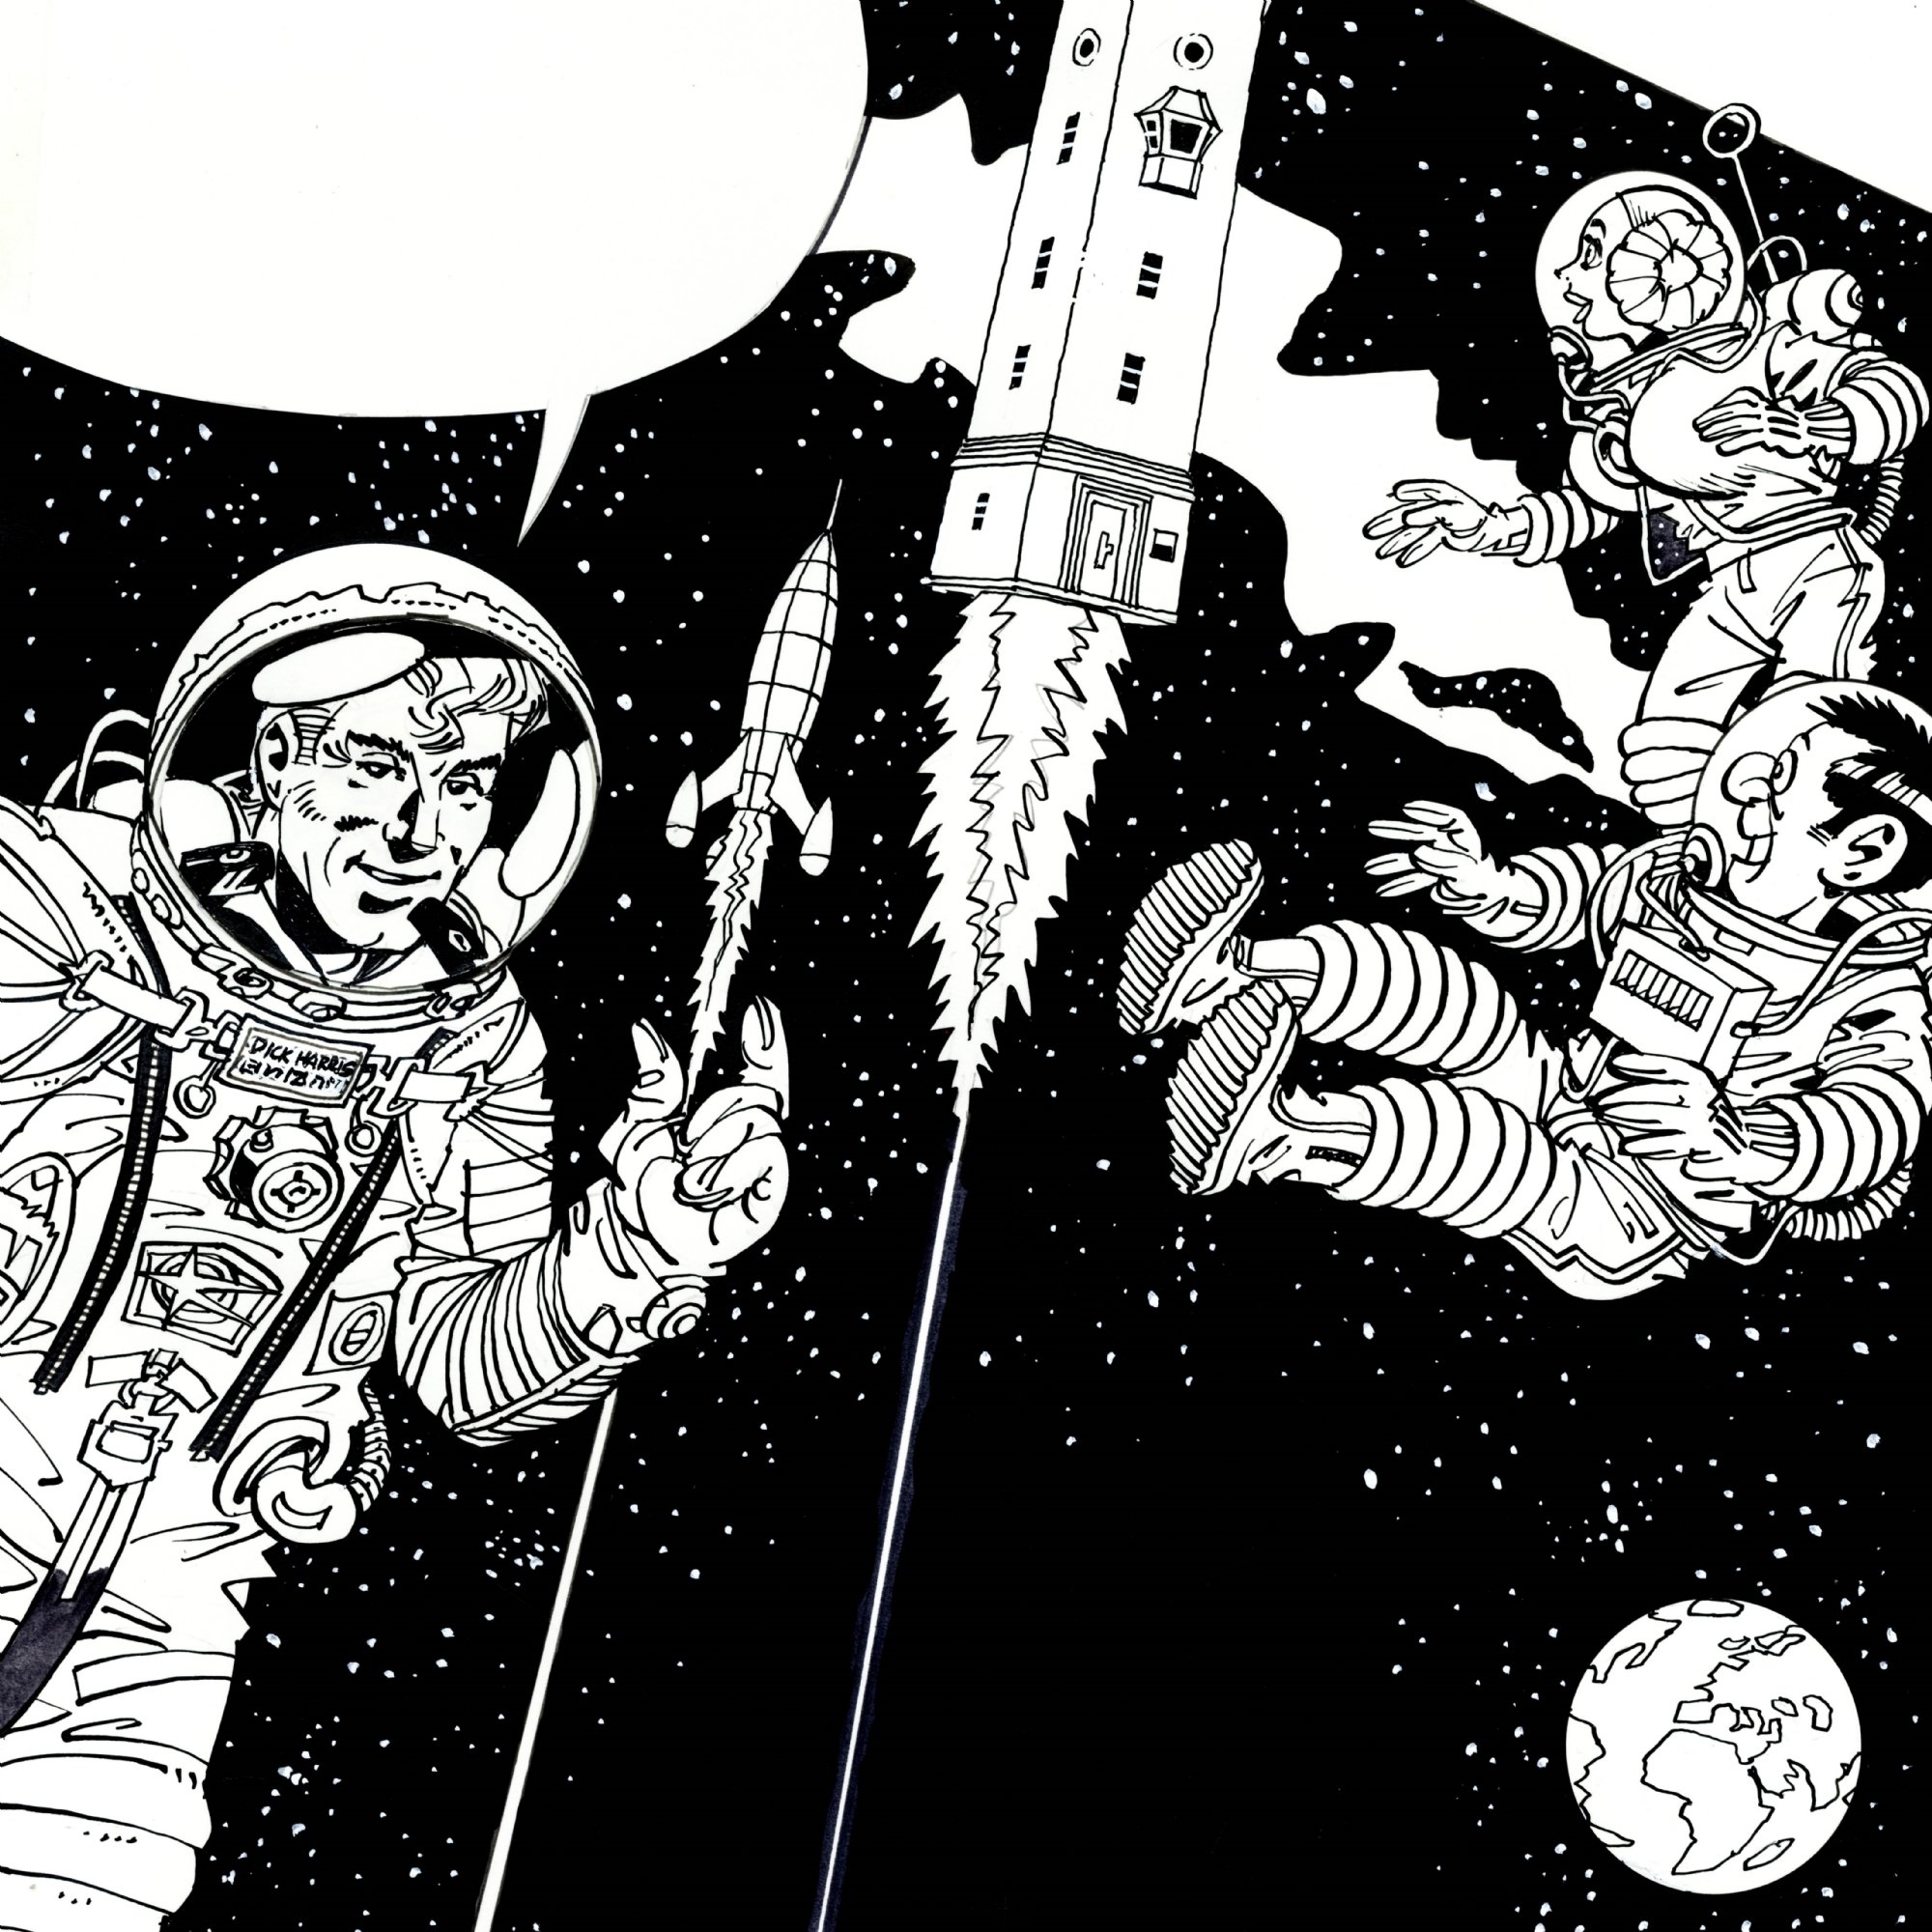 2018 - Agent 327 / Arent Brandt - Comics in Space (Illustration for ...